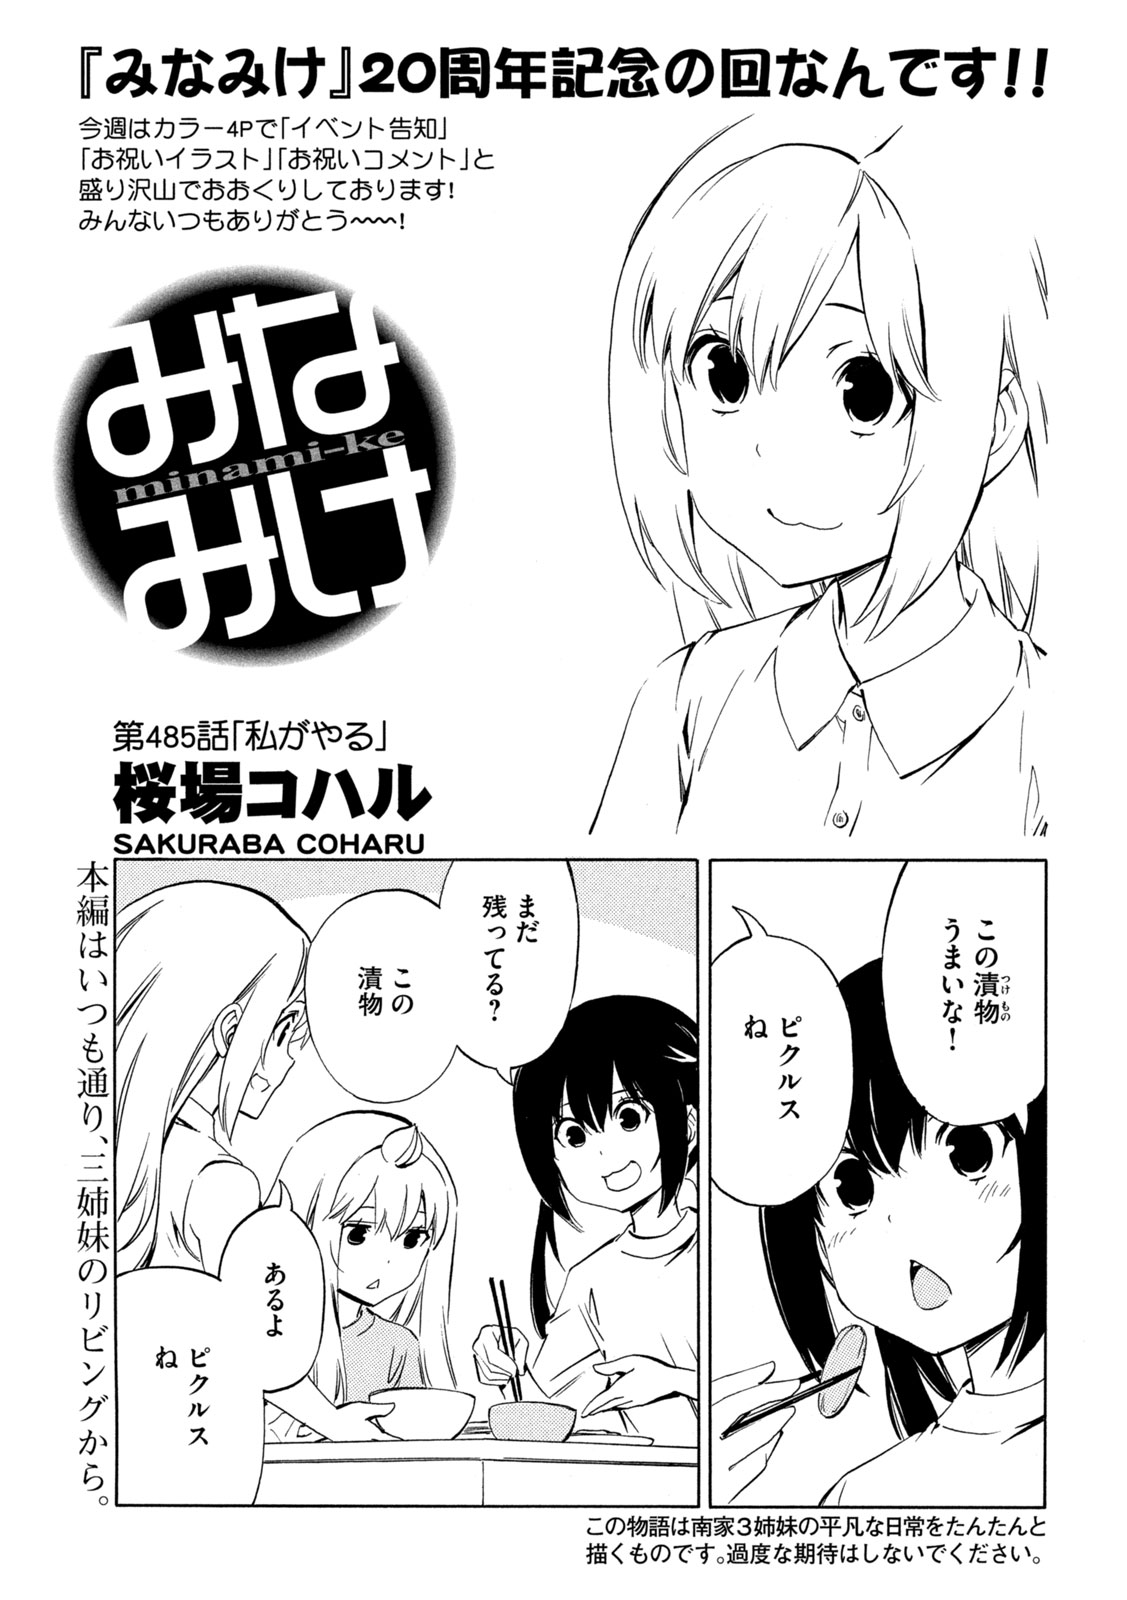 Minami-ke - Chapter 485 - Page 1